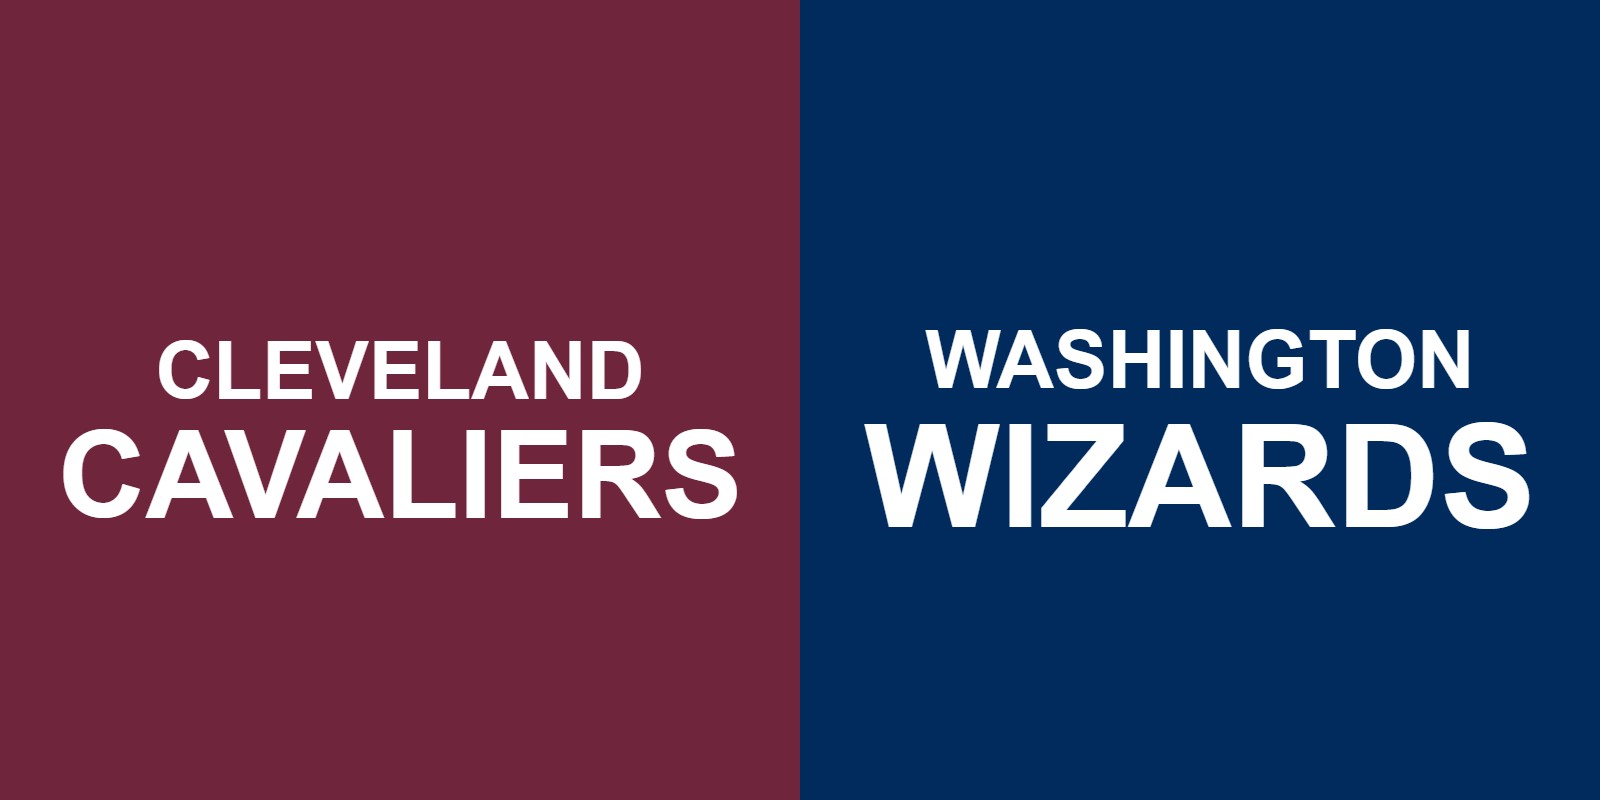 Cavaliers vs Wizards